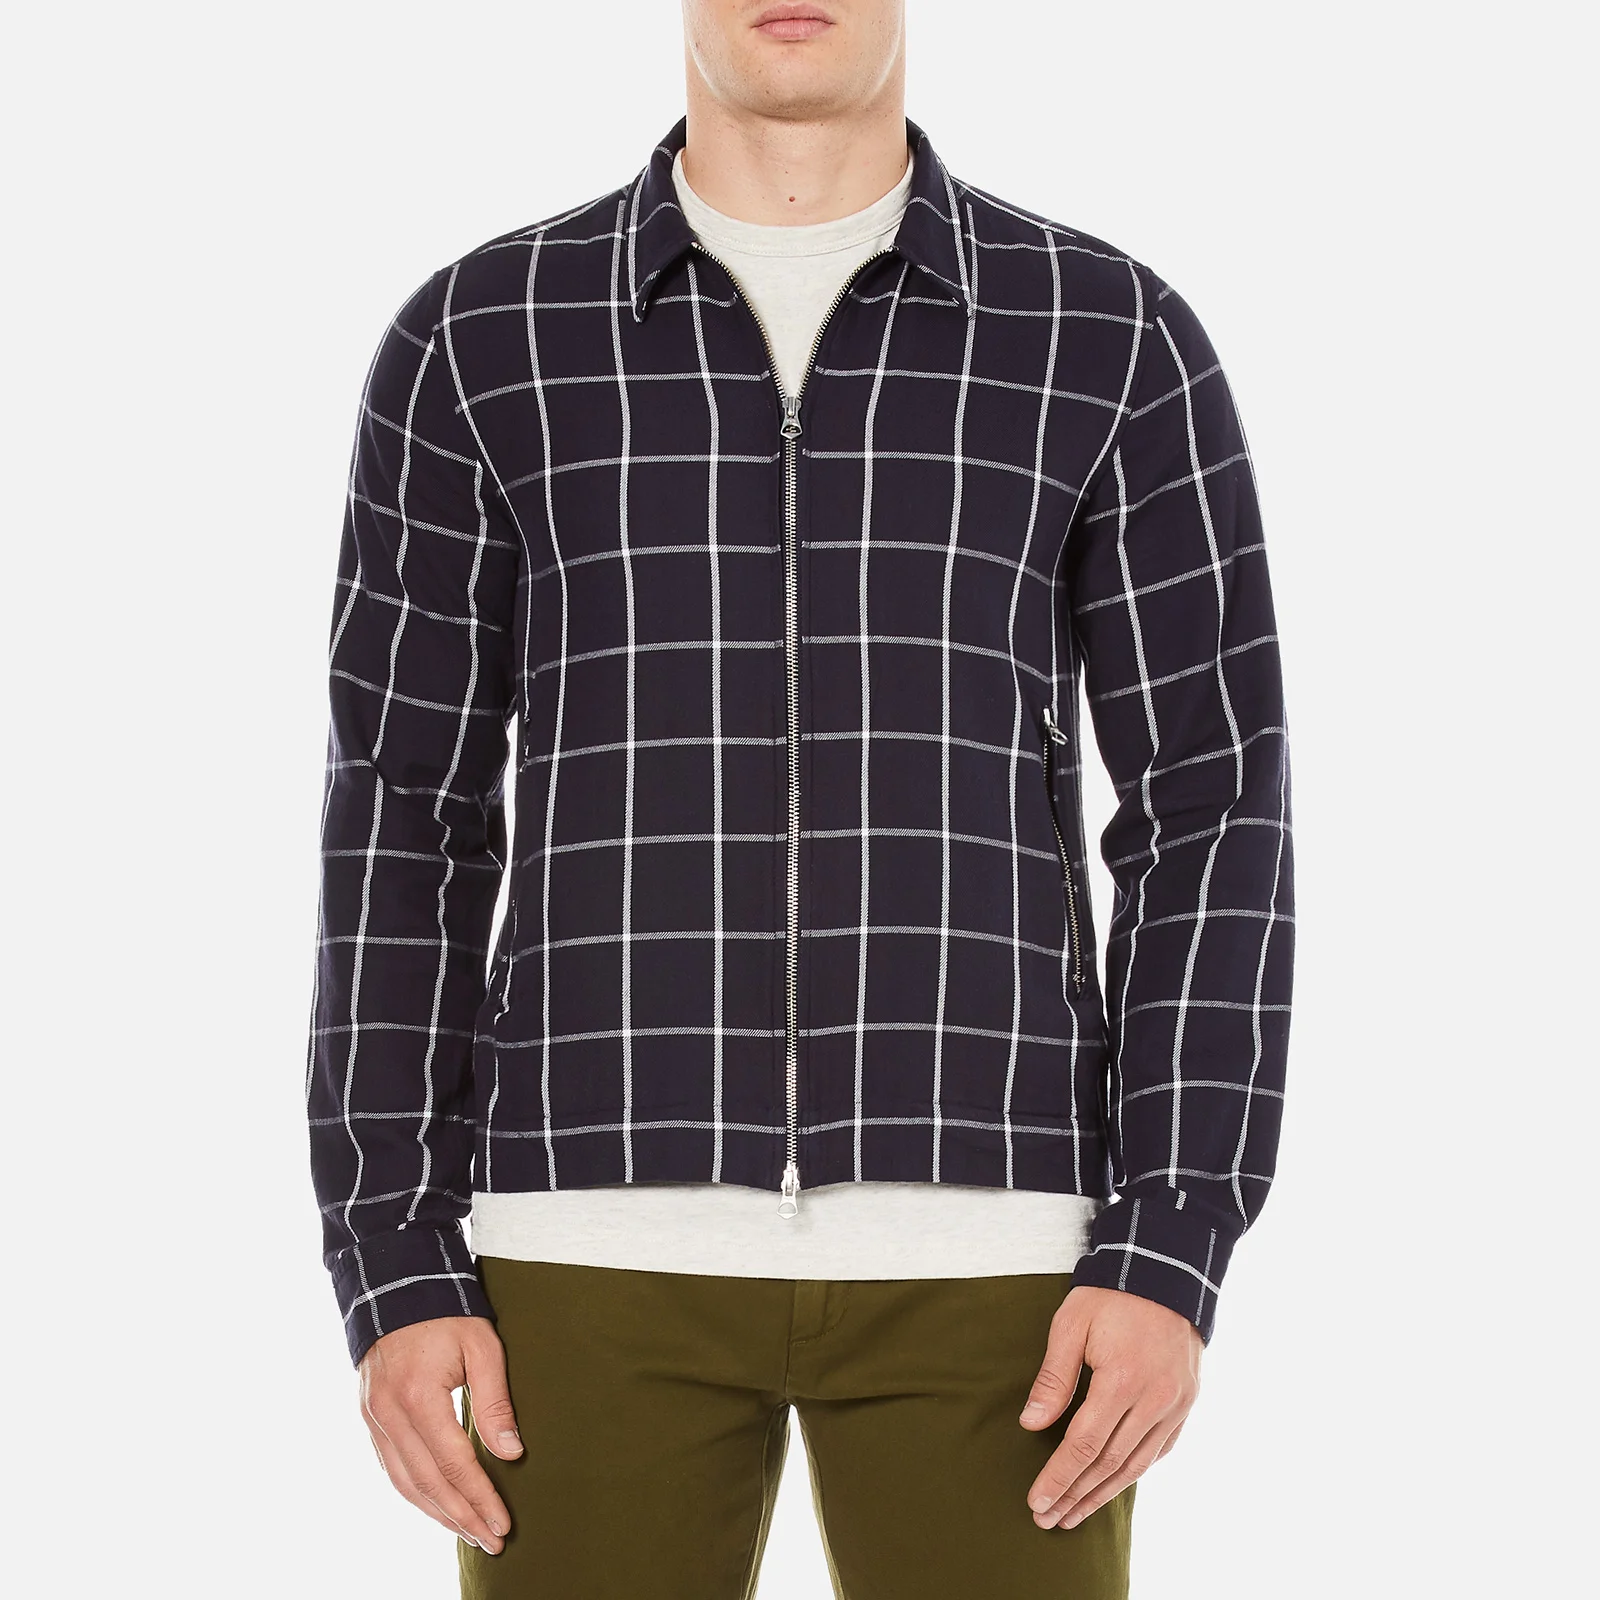 GANT Rugger Men's Brooklyn Twill Shirt Jacket - Marine Image 1